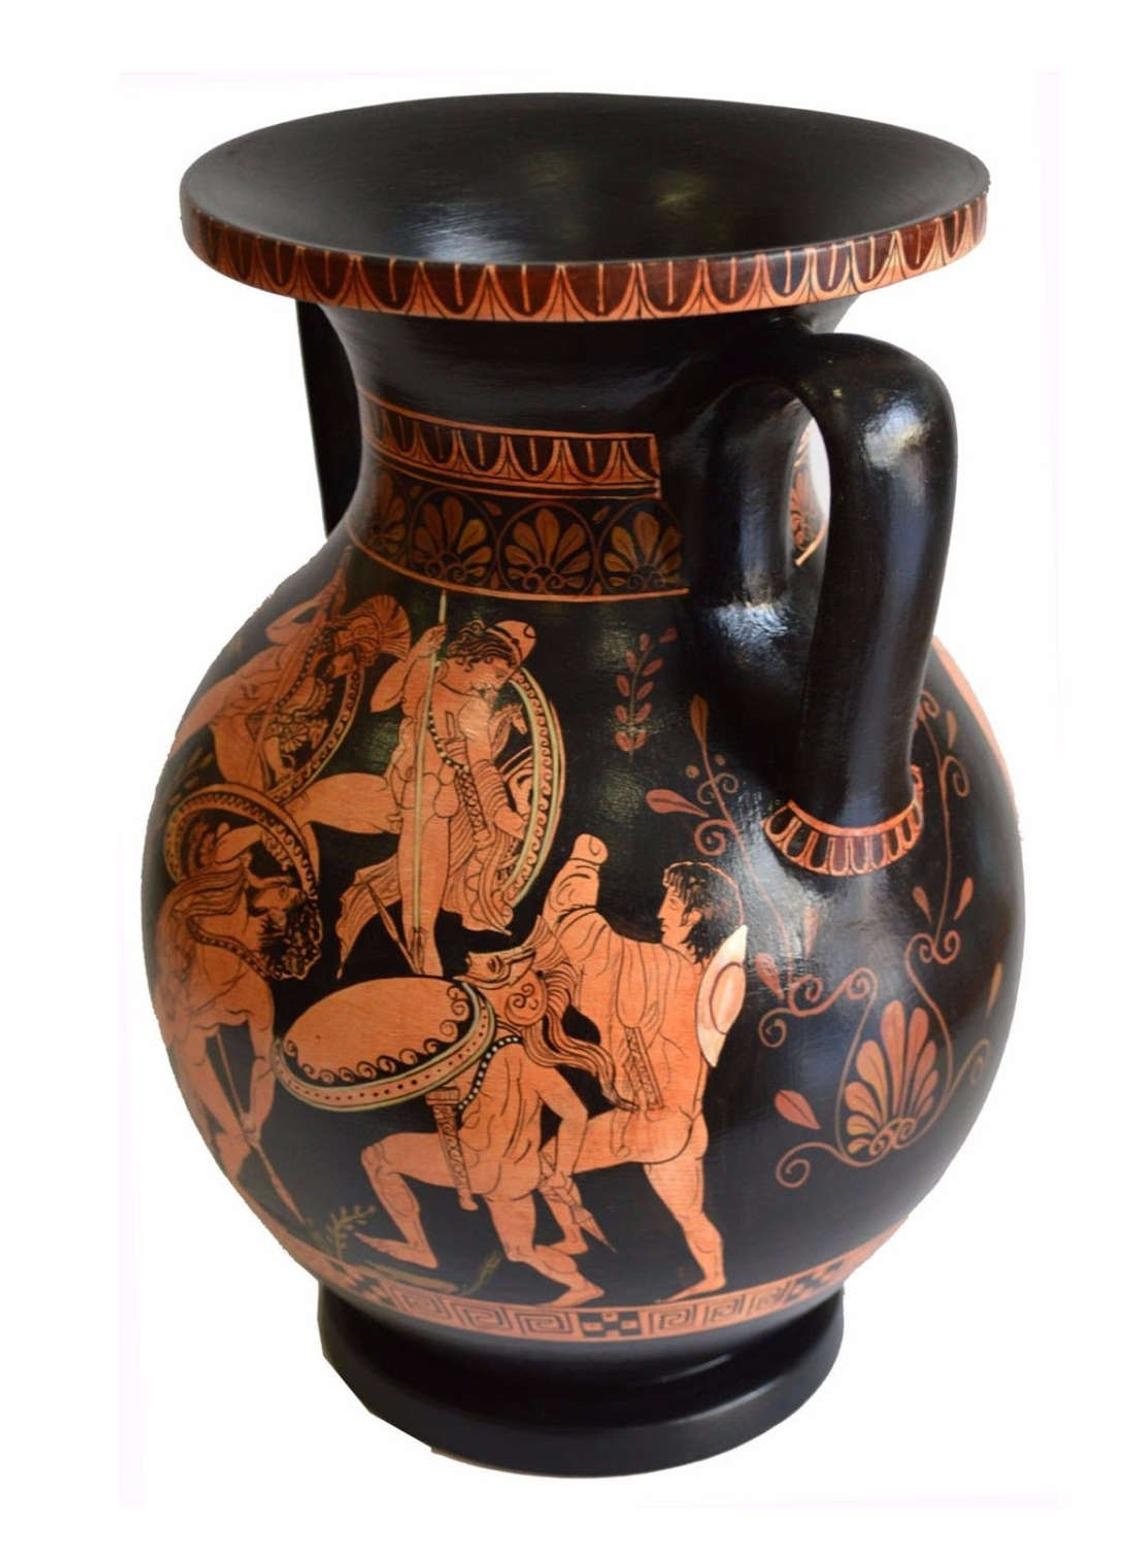 Gigantomachy - Giants against Olympian Gods - Pronomos Painter - Red Figure Pelike Vase - 400 BC - National Athens Museum - Reproduction